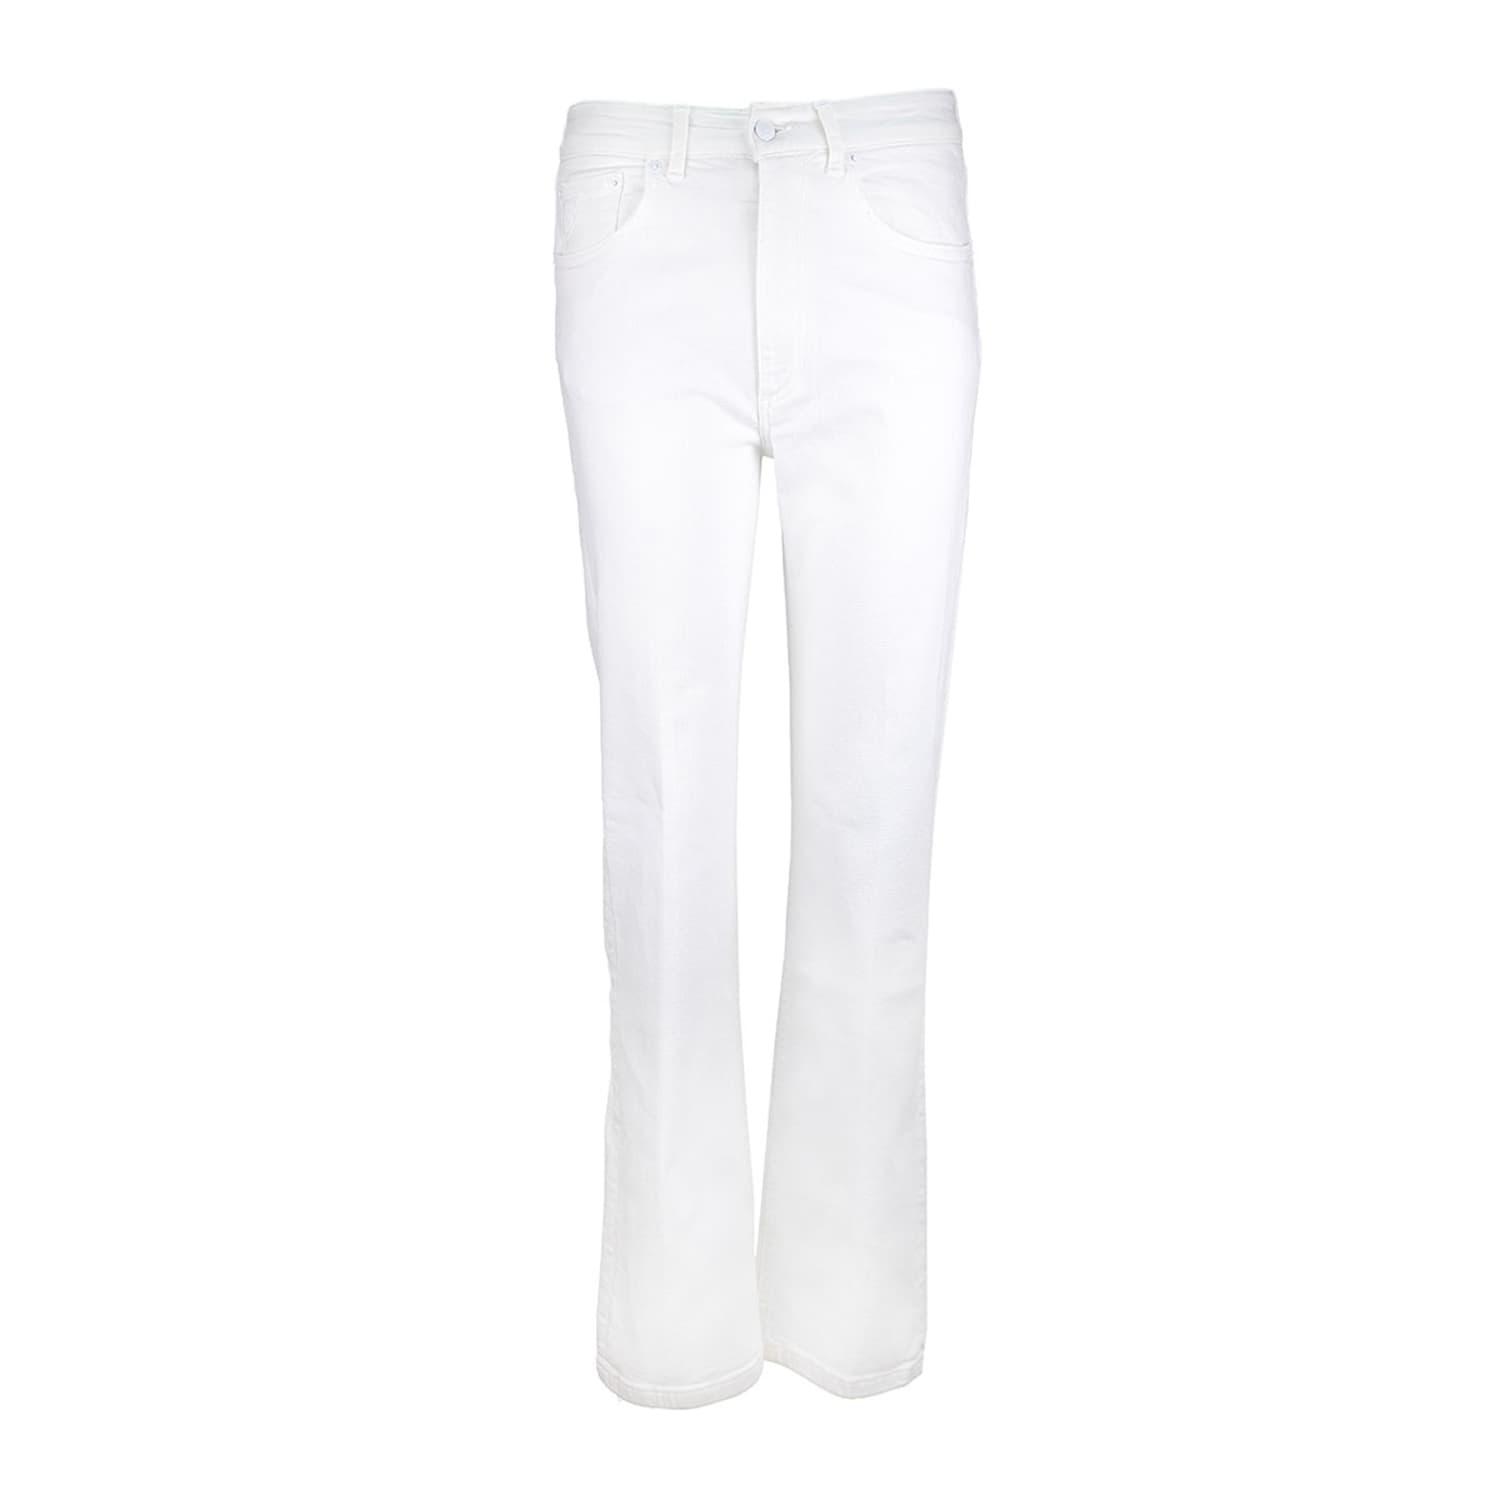 Lois Jeans River Nicci White Jeans | Lyst